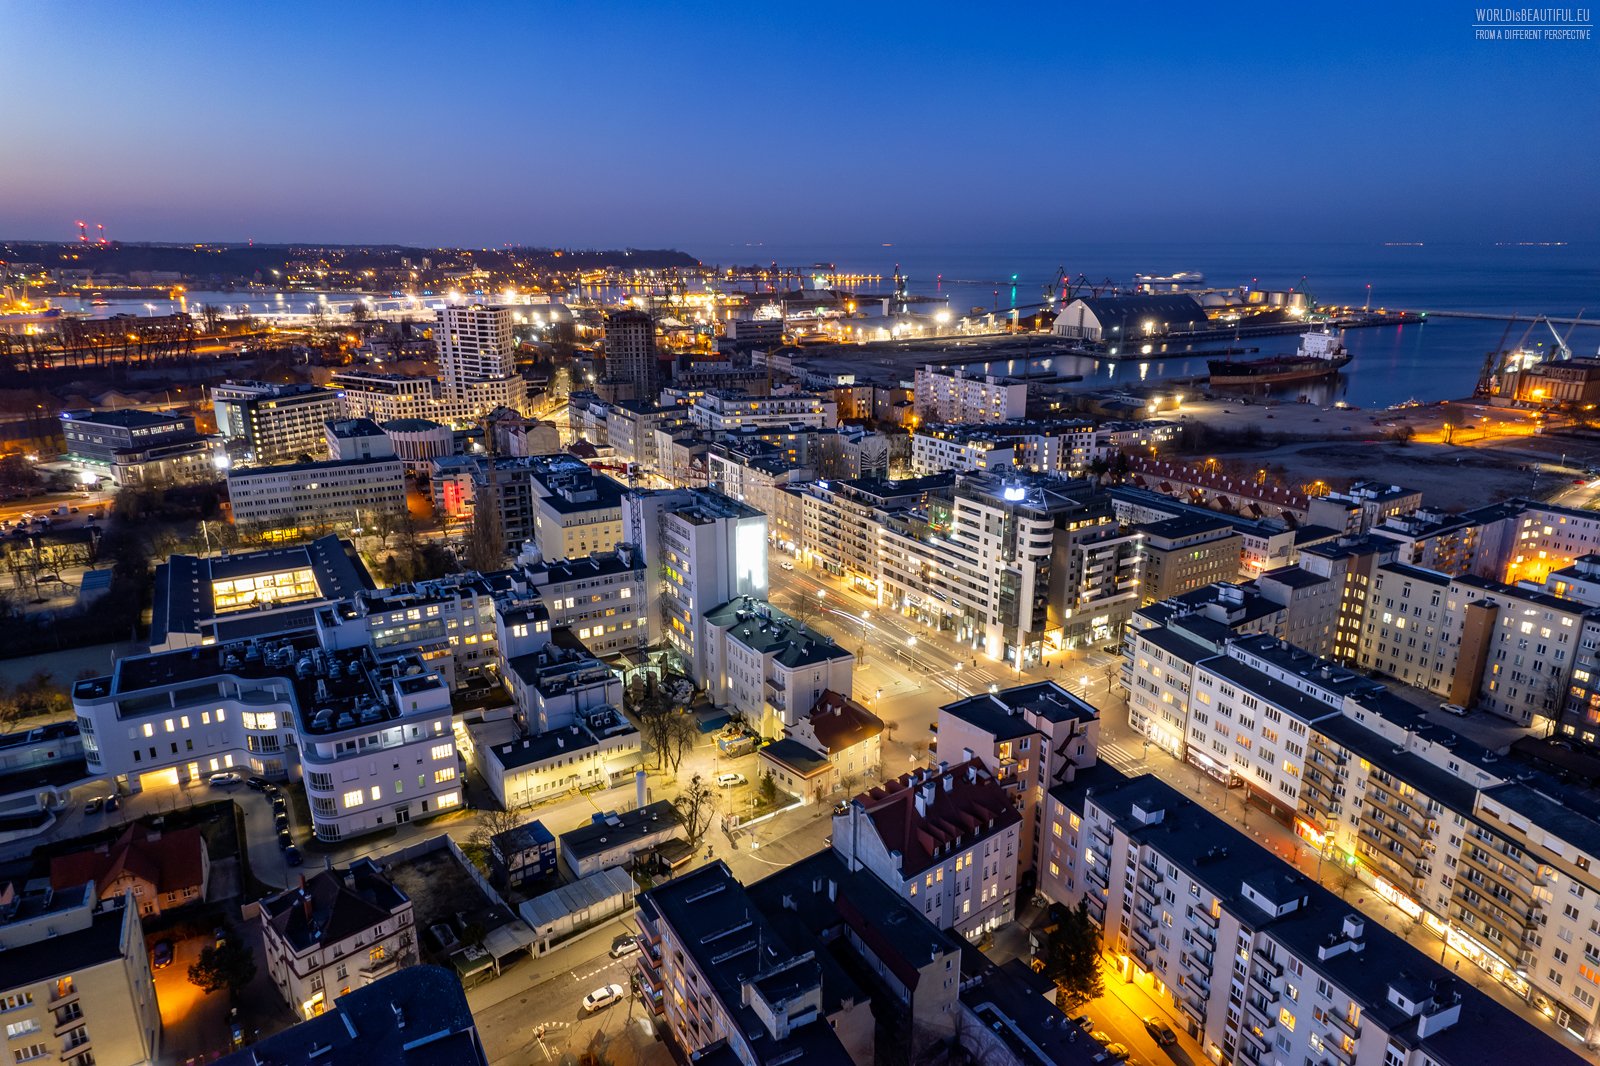 Night photographs of Gdynia